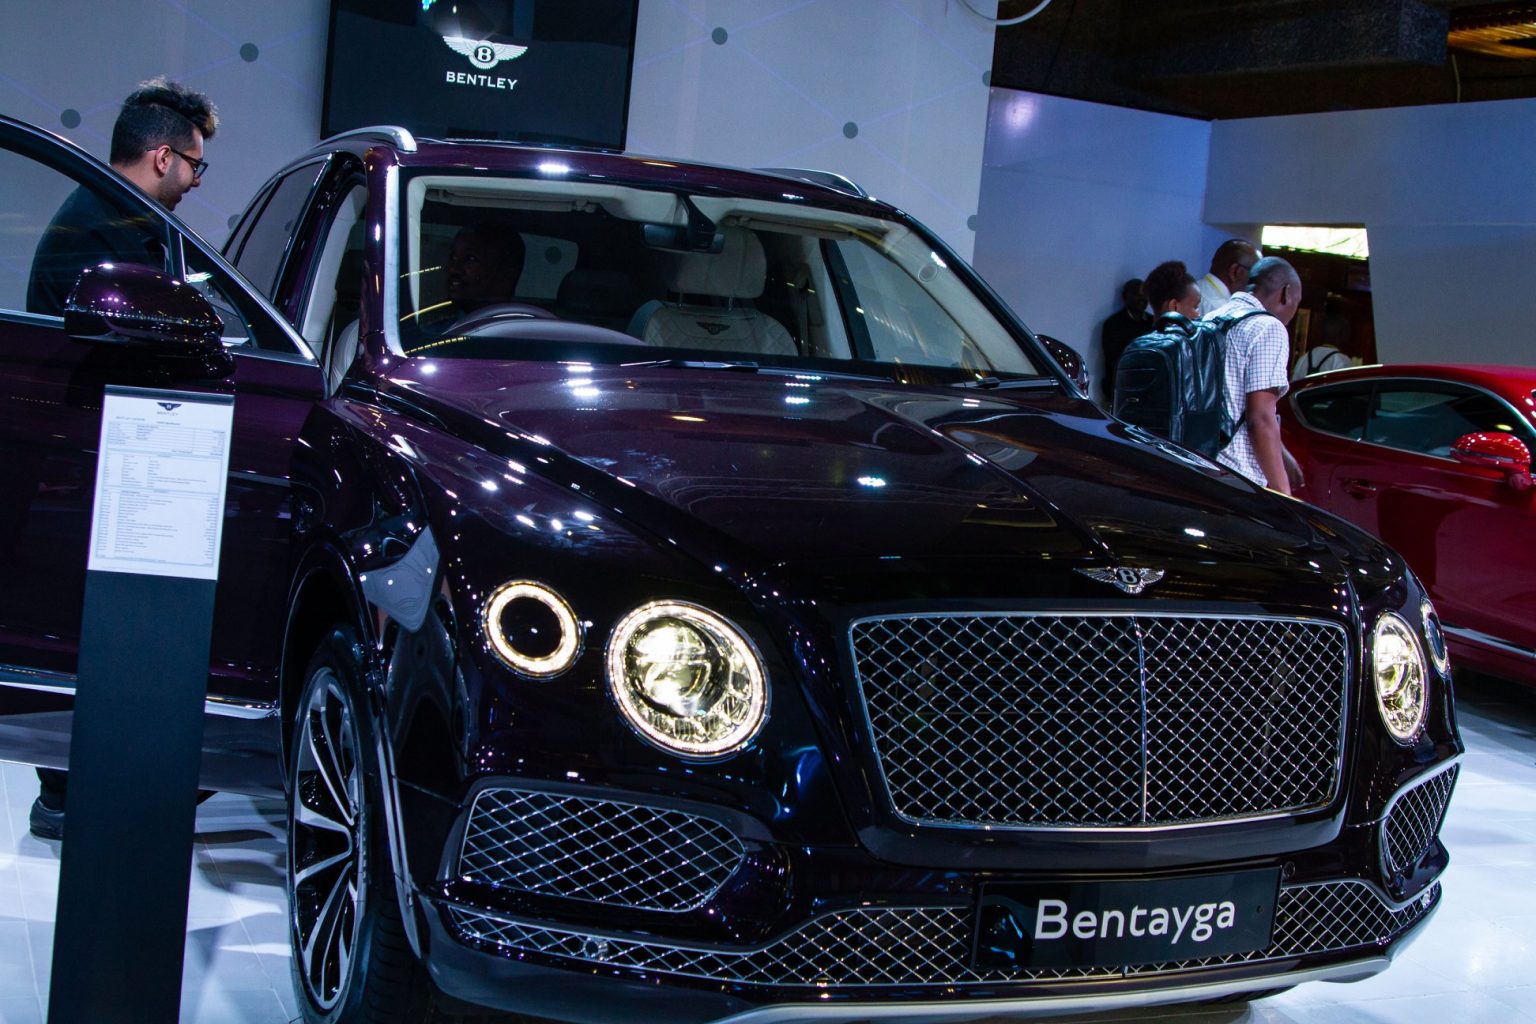 Interview With Bentley Nairobi General Manager Dimitrios Karakoulas On Grand Opening